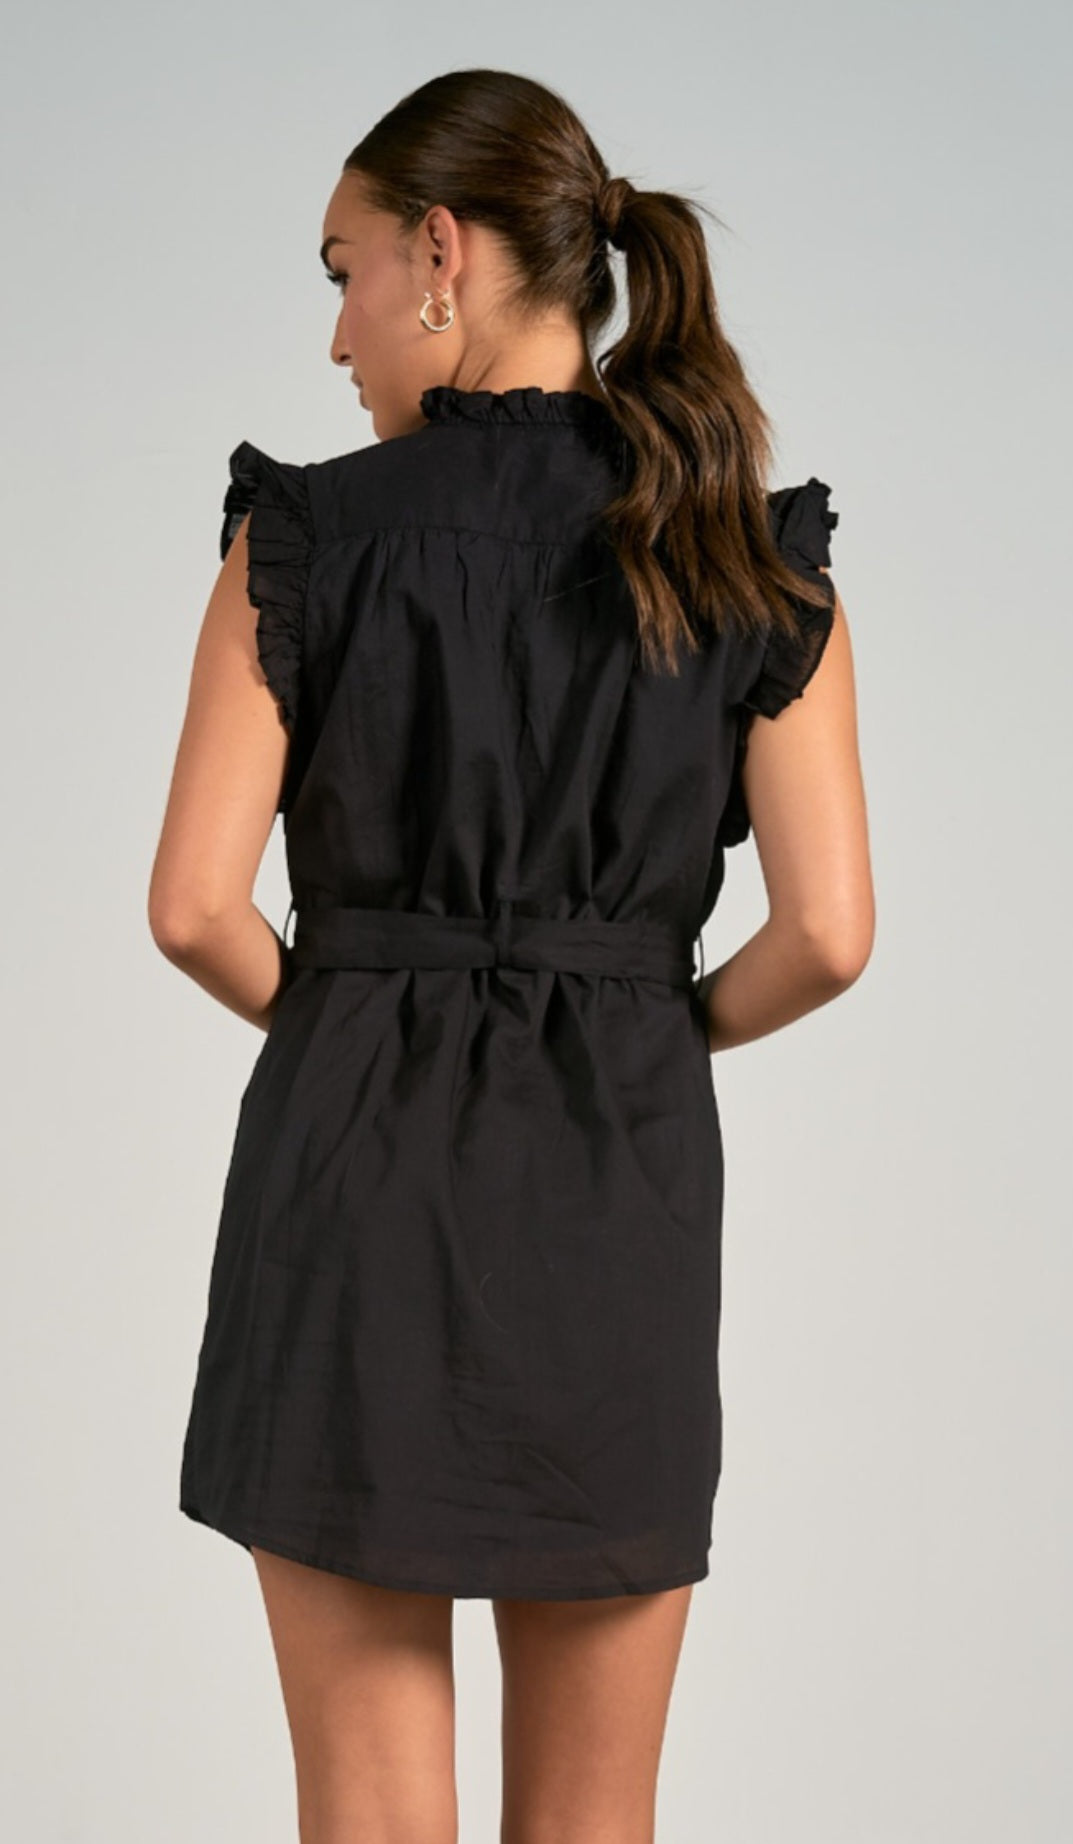 Audrey black dress